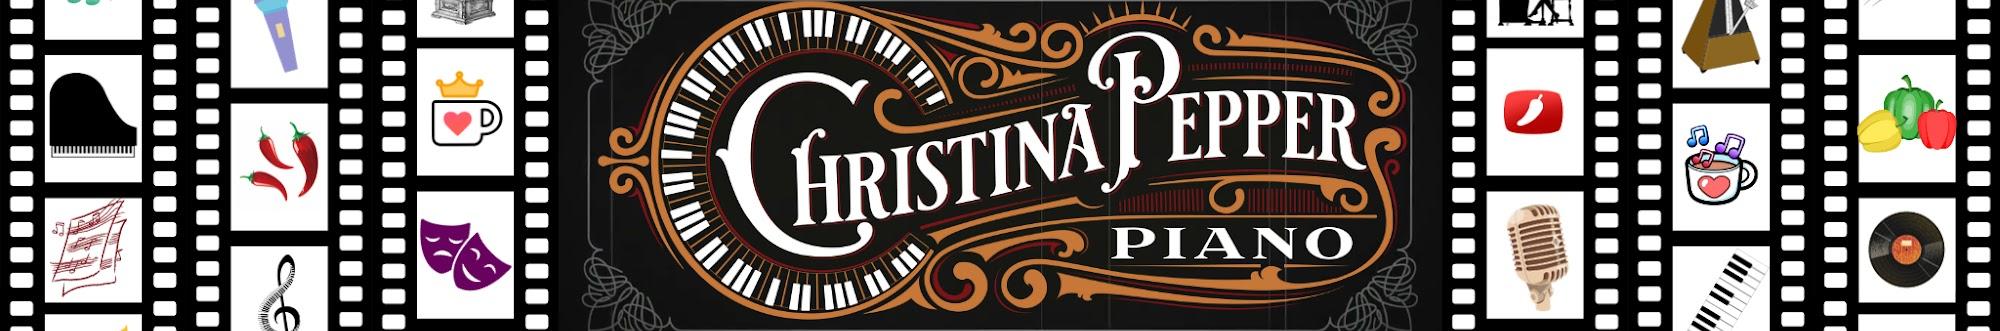 Christina Pepper